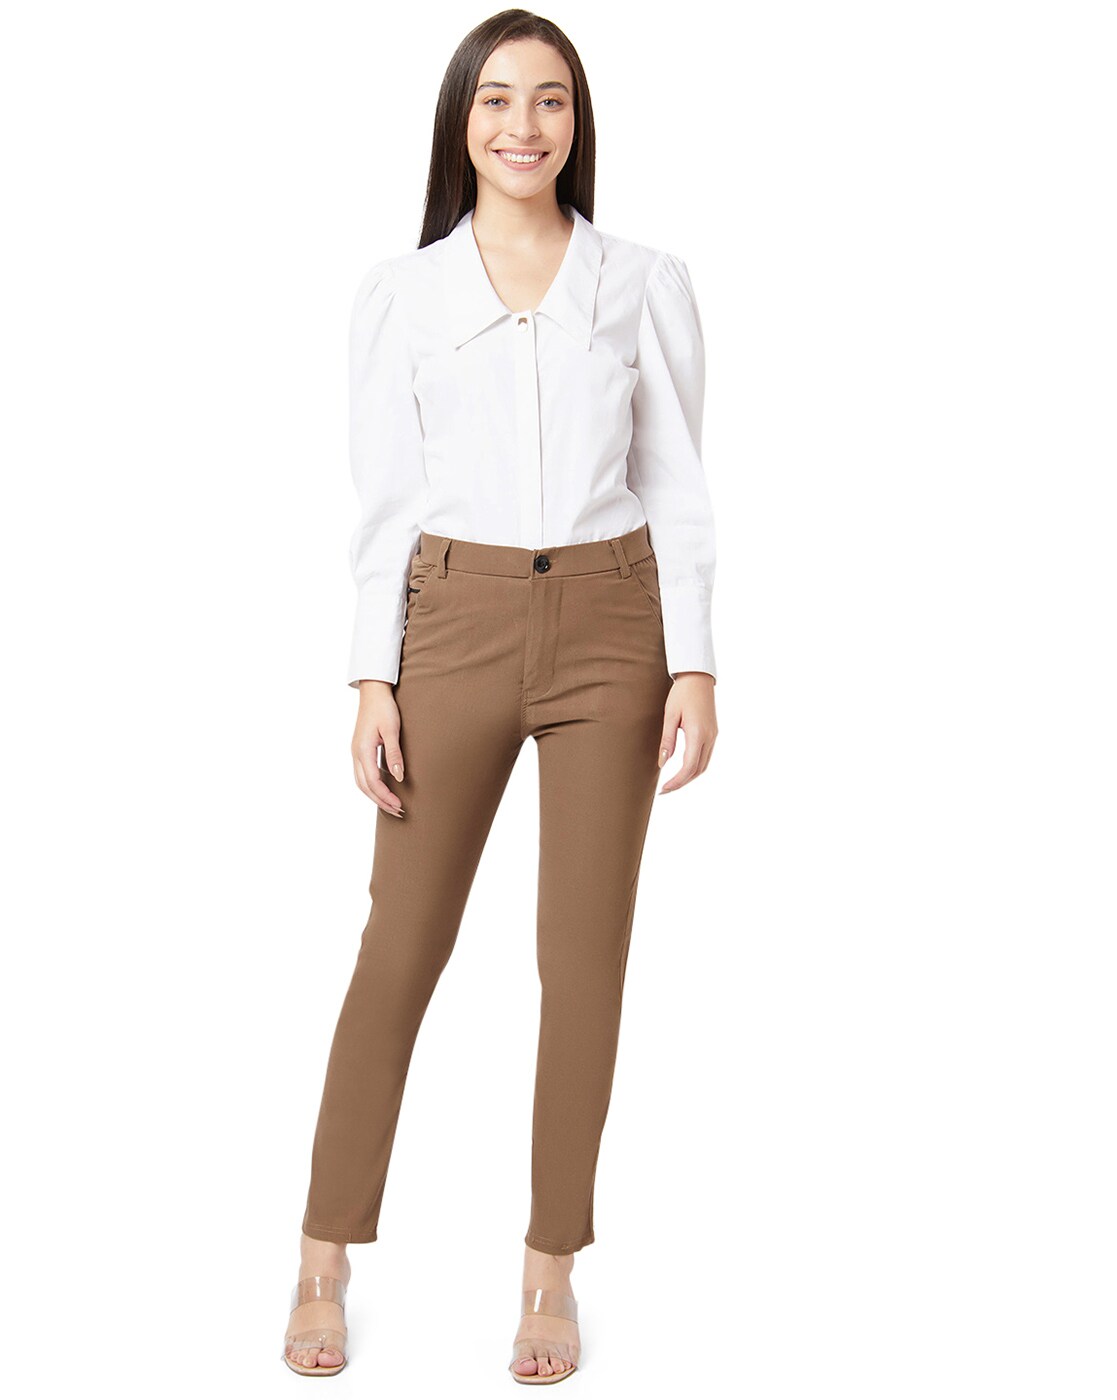 Women Coffee Brown Trousers  Buy Women Coffee Brown Trousers online in  India